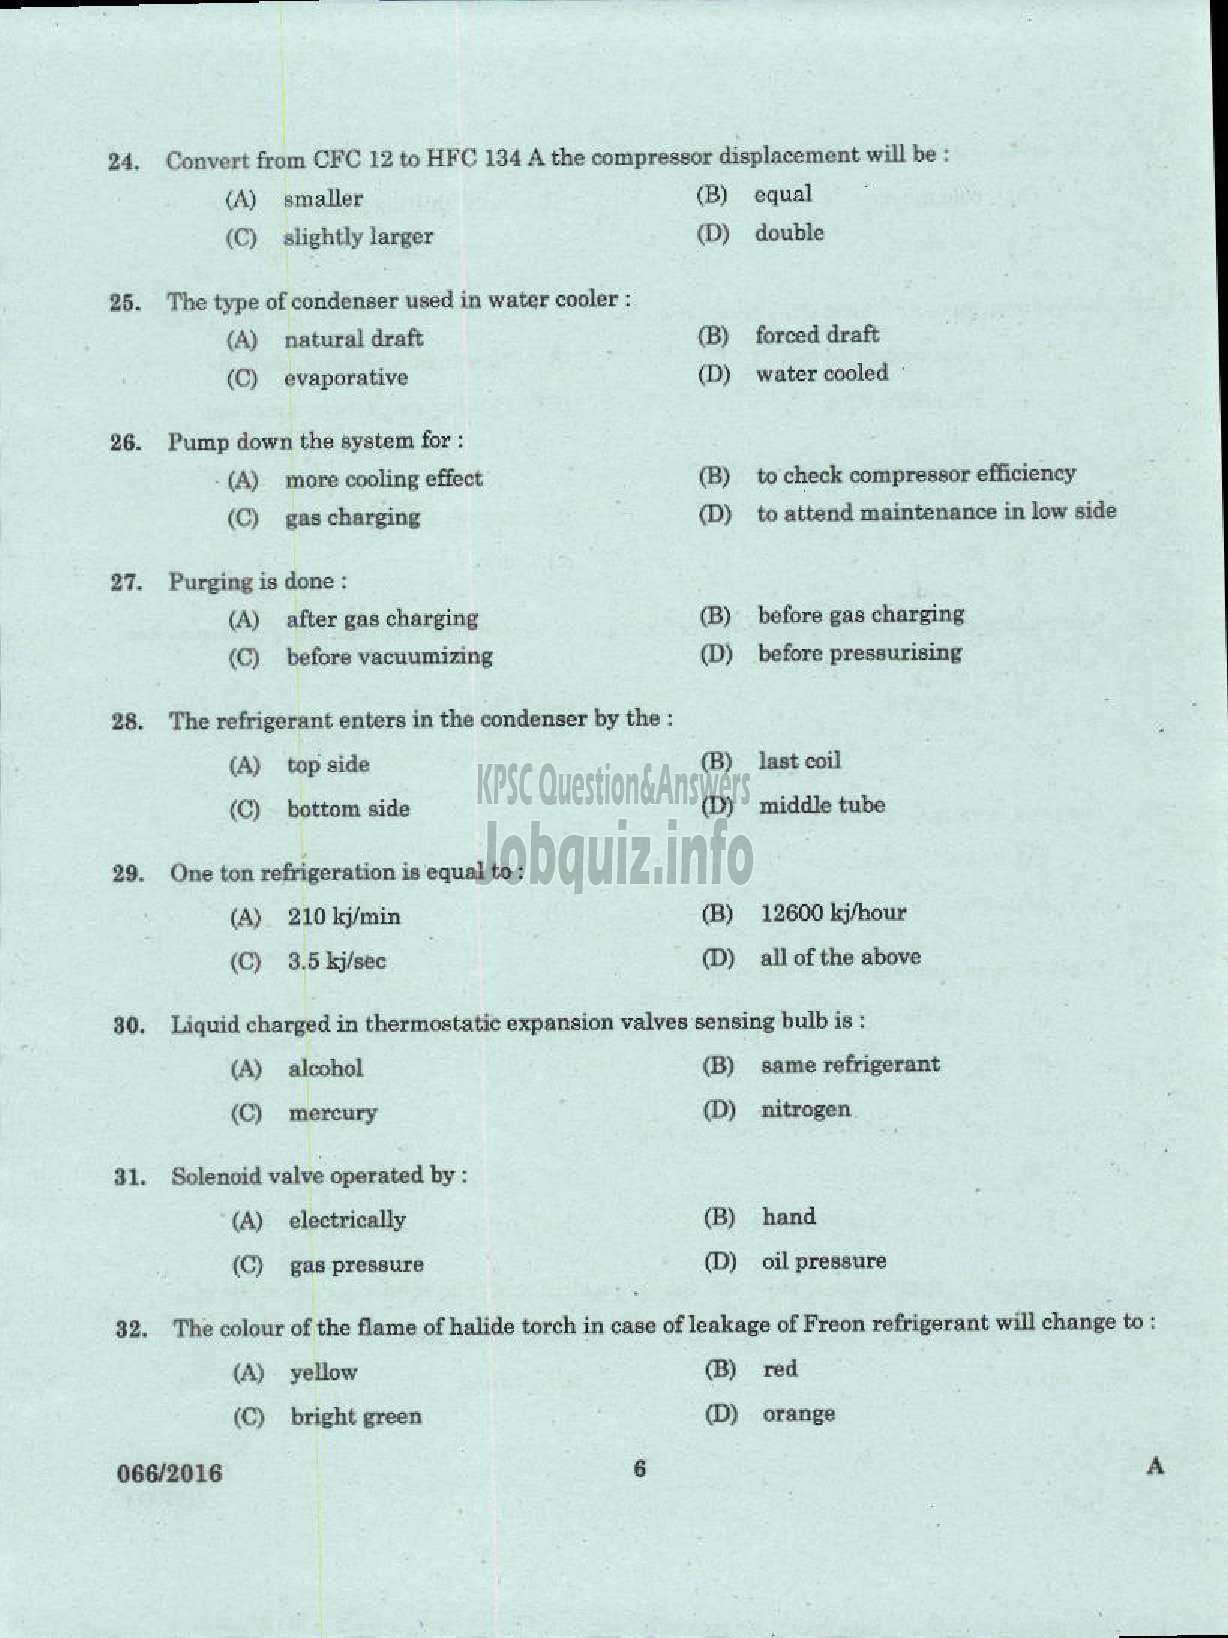 Kerala PSC Question Paper - REFRIGERATION MECHANIC UIP HEALTH SERVICES-4